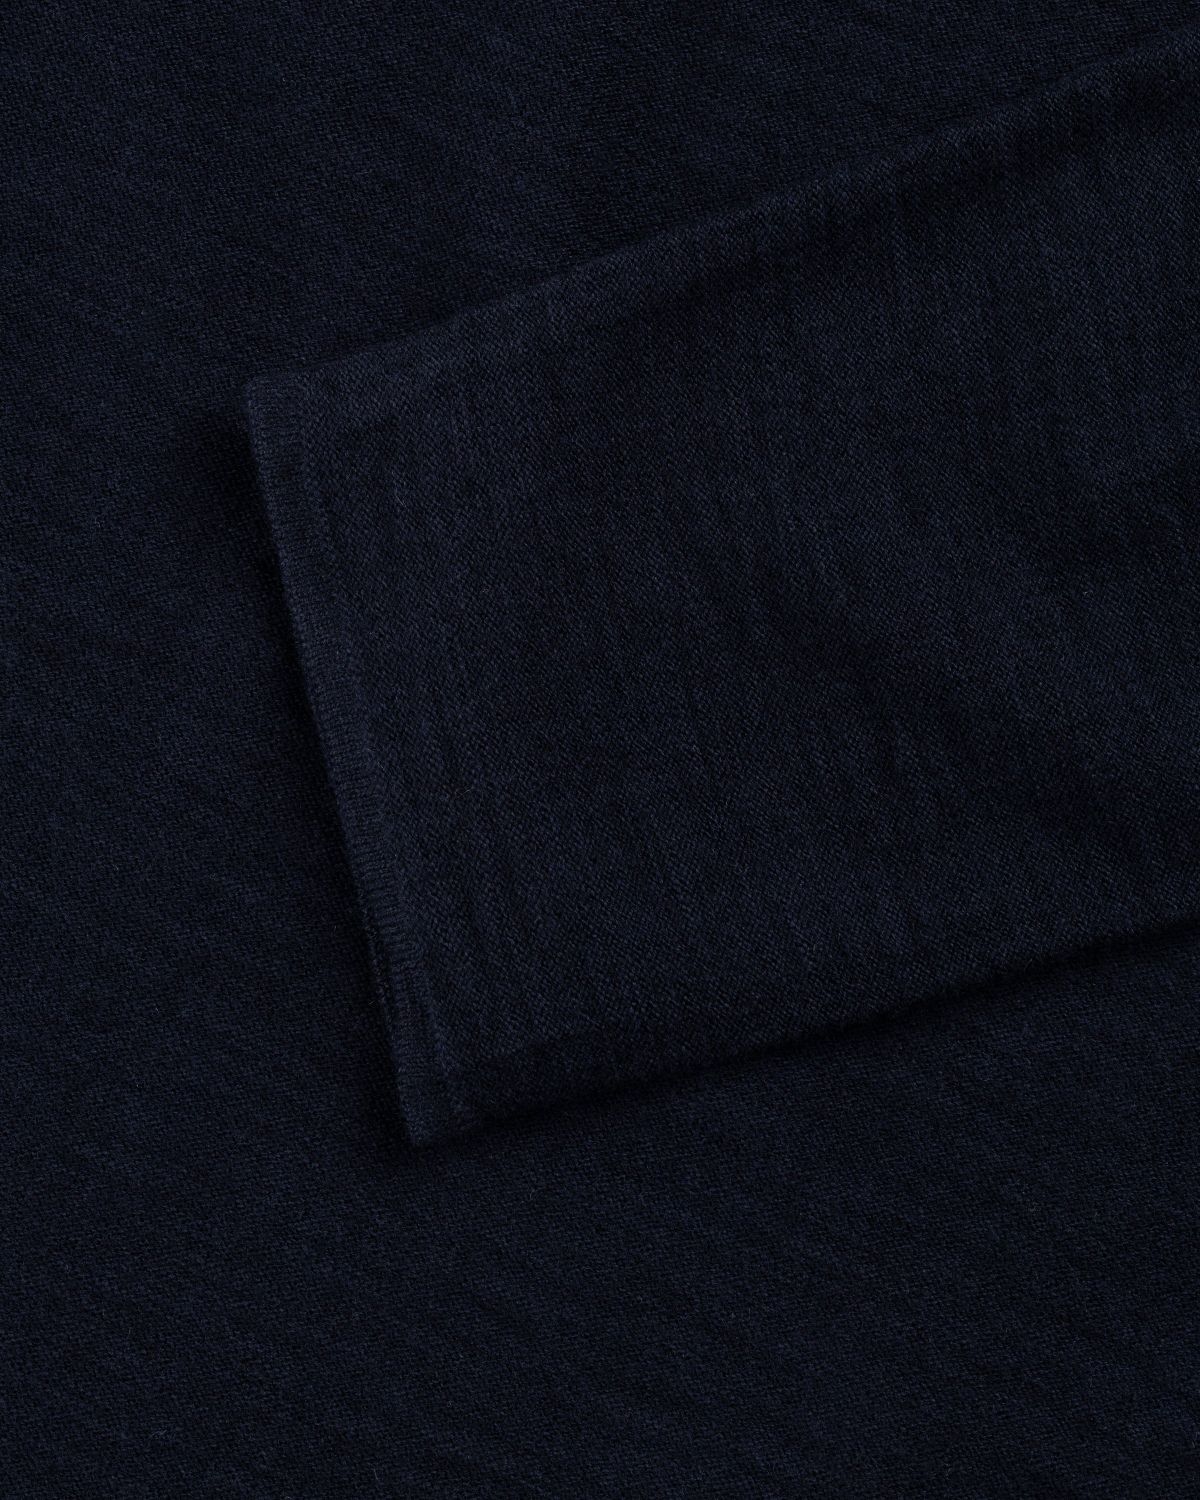 Stone Island – Knit Long-Sleeve Polo Navy Blue - Knitwear - Blue - Image 7